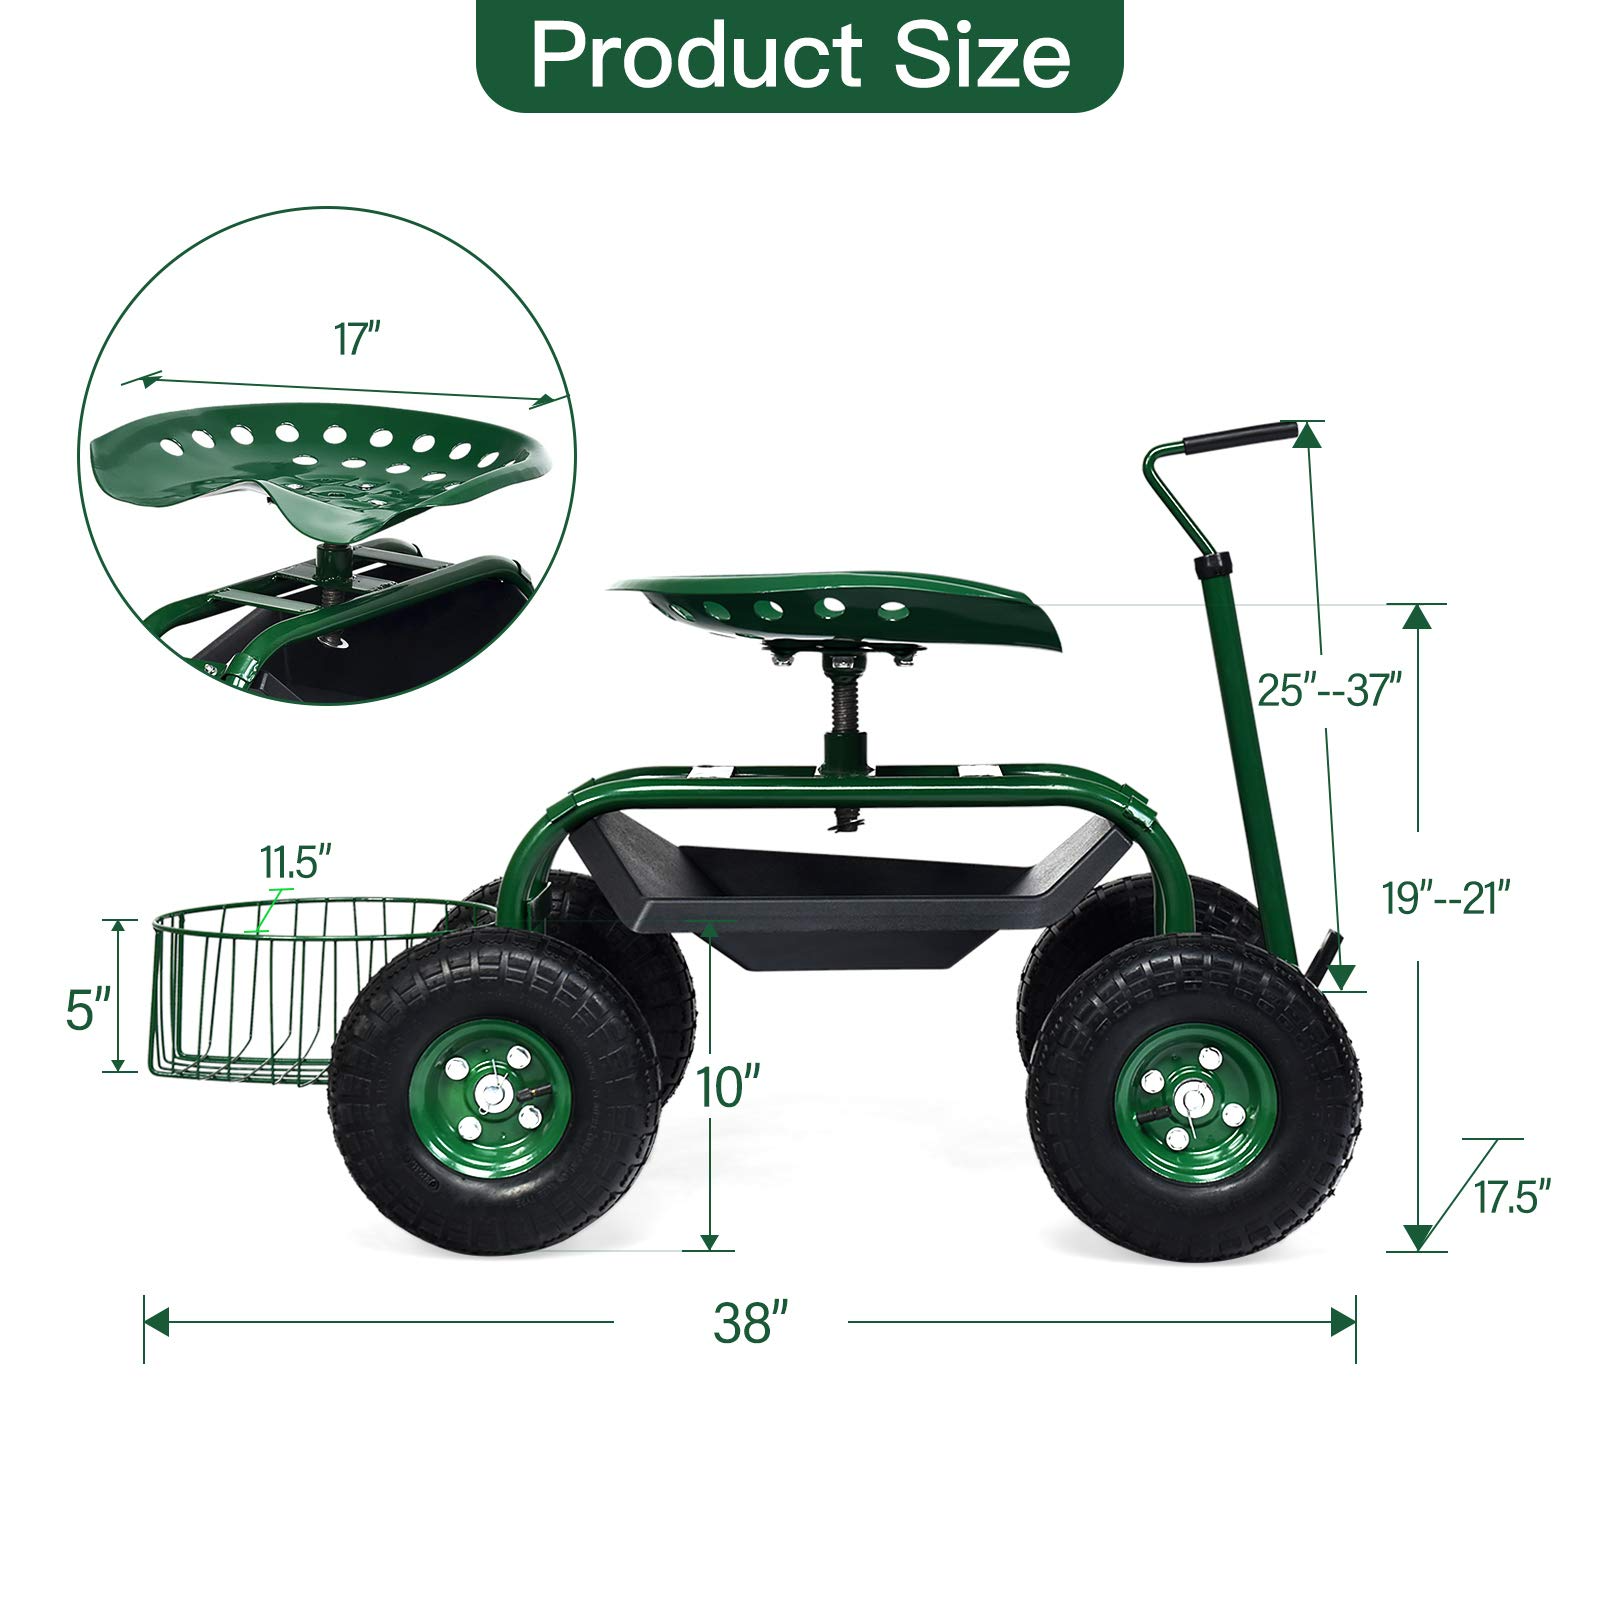 Giantex Garden Cart, 4-Wheel Gardening Workseat with Storage Basket (Green)